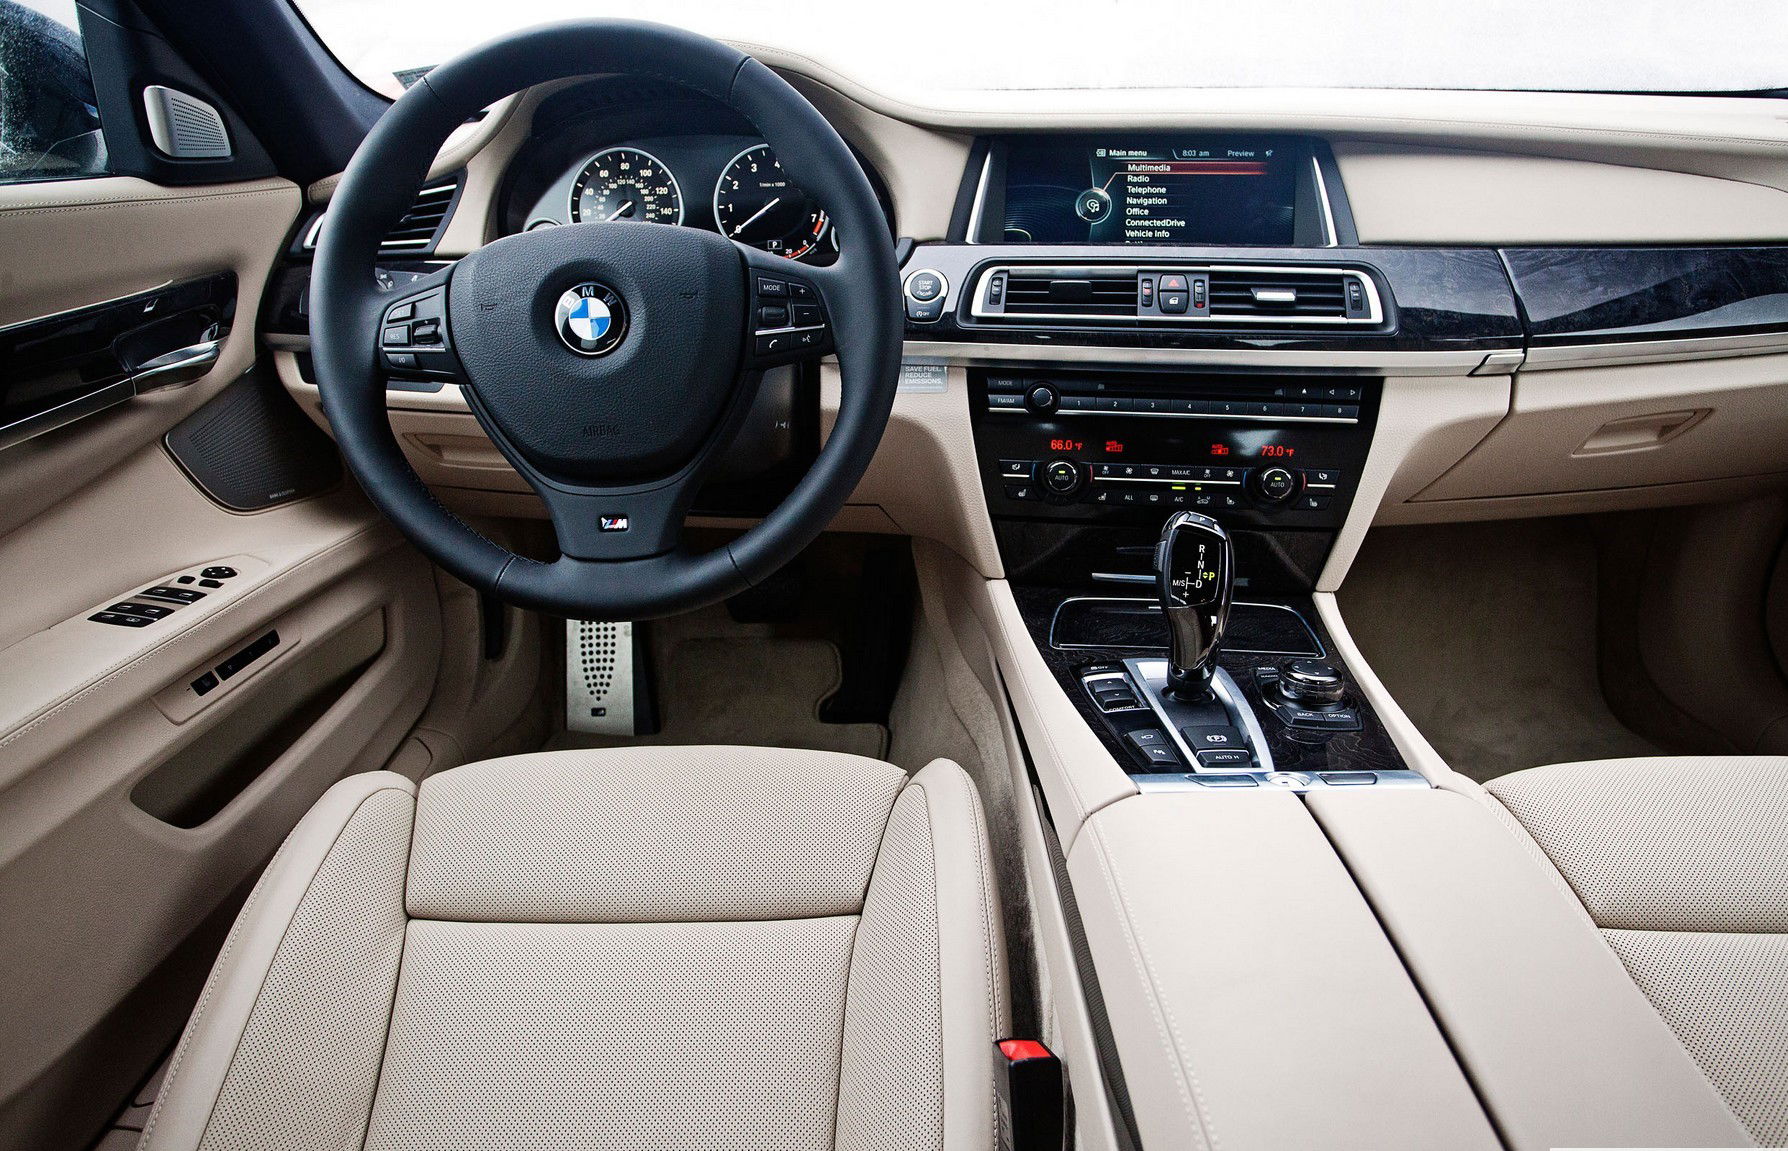 2013 BMW 760LI HSS interior.